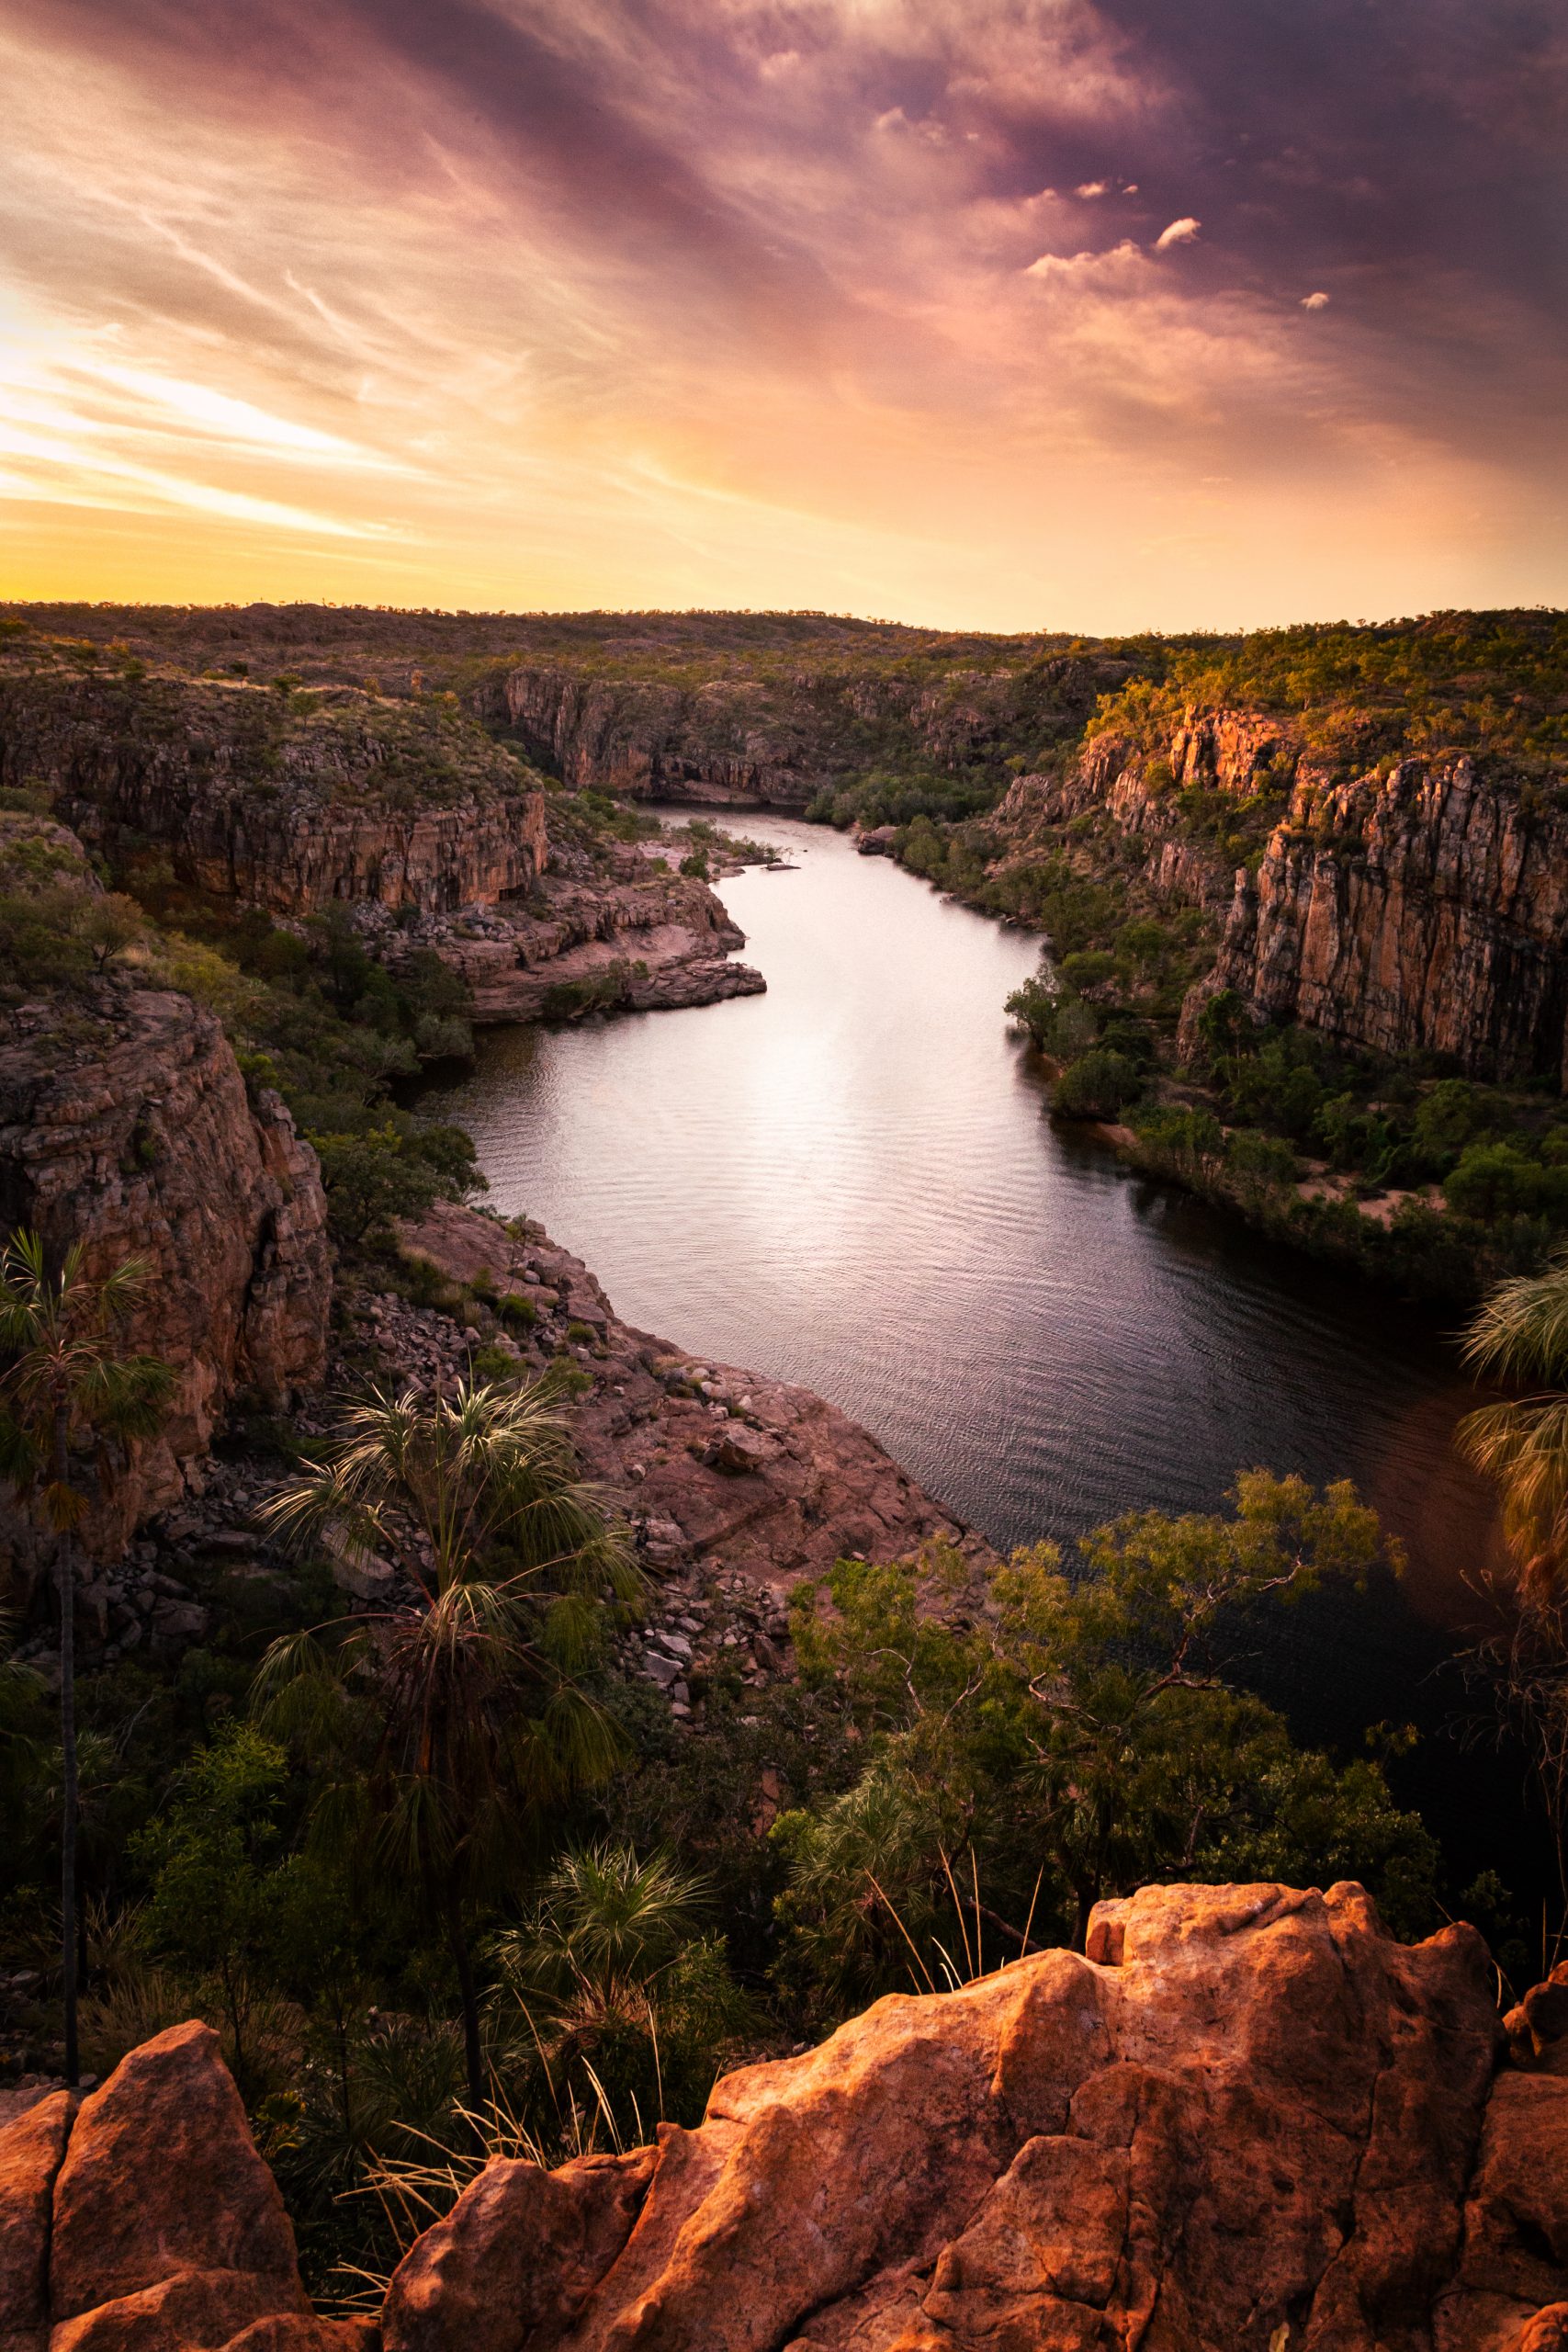 Sunset over Katherine Gorge in the Nitmiluk National Park, Northern Territory, Australia